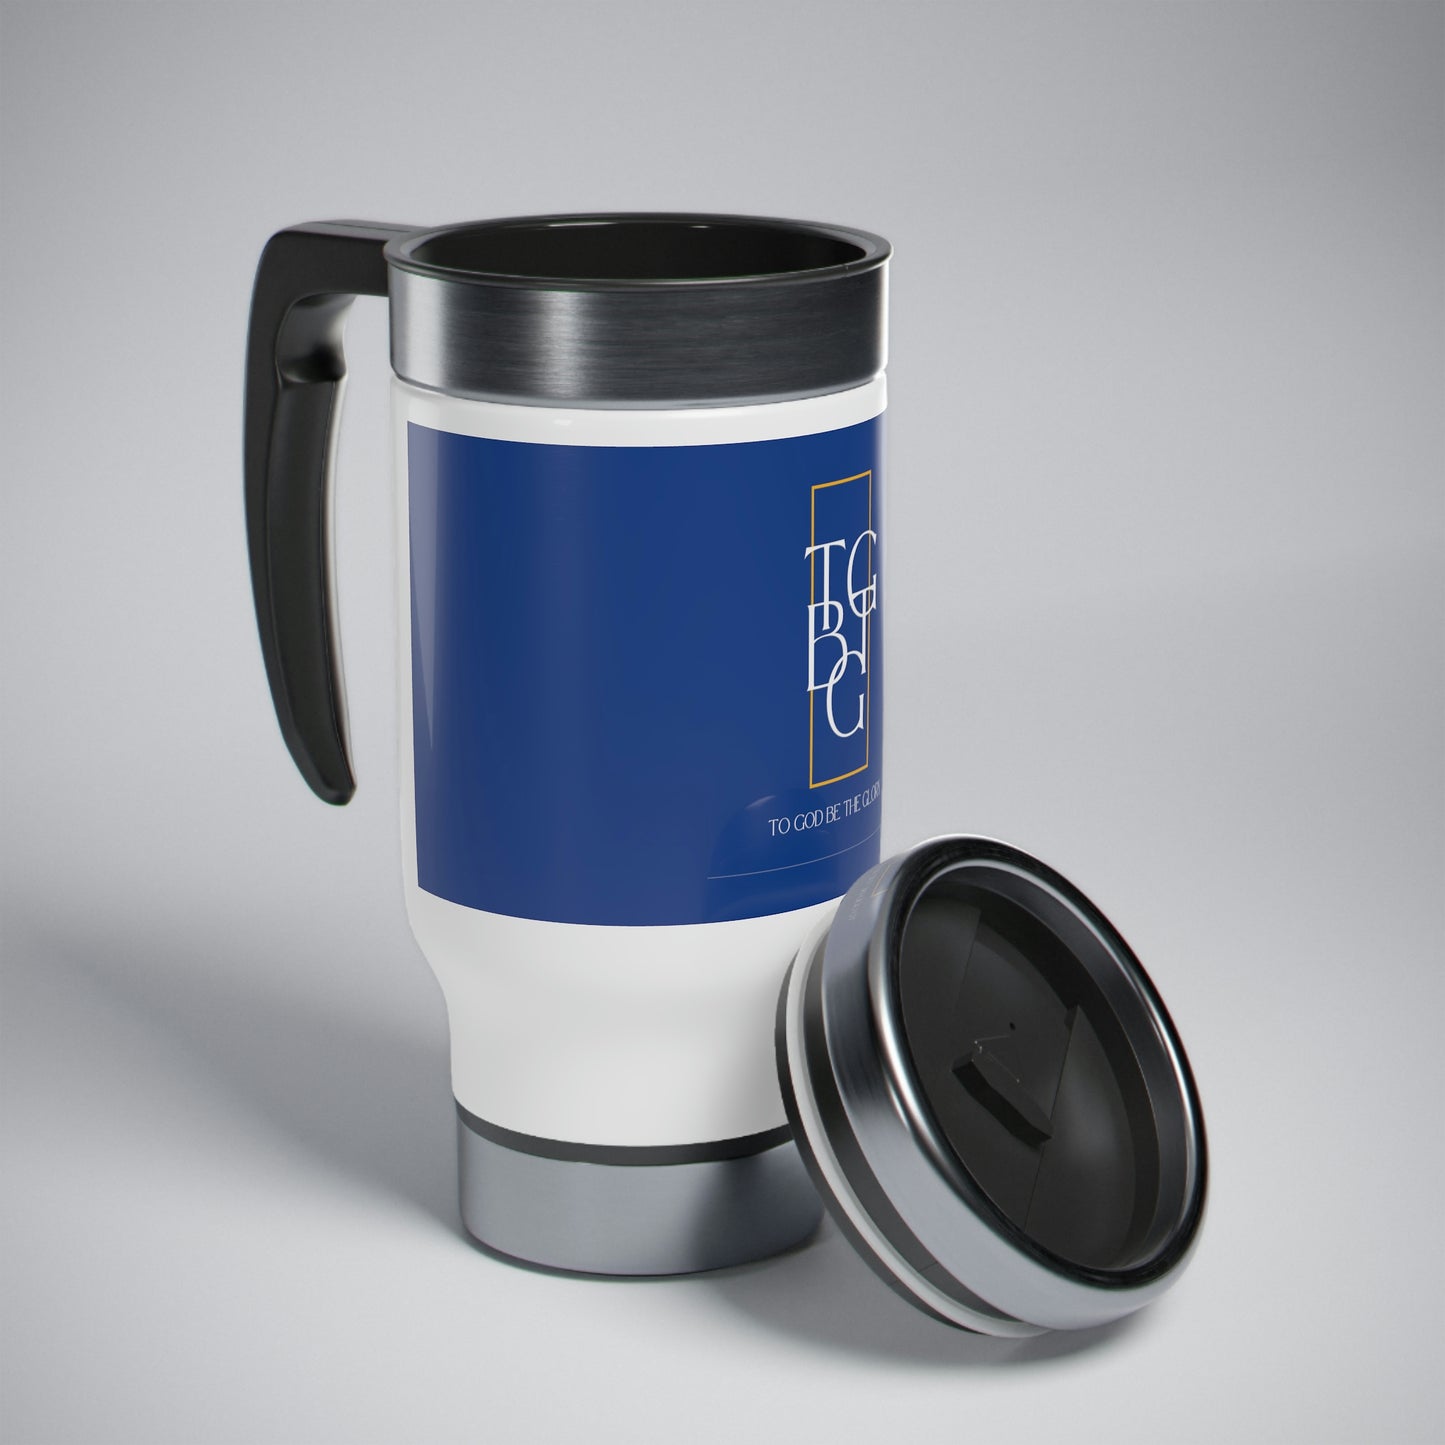 Blue TGBTG Stainless Steel Travel Mug with Handle, 14oz